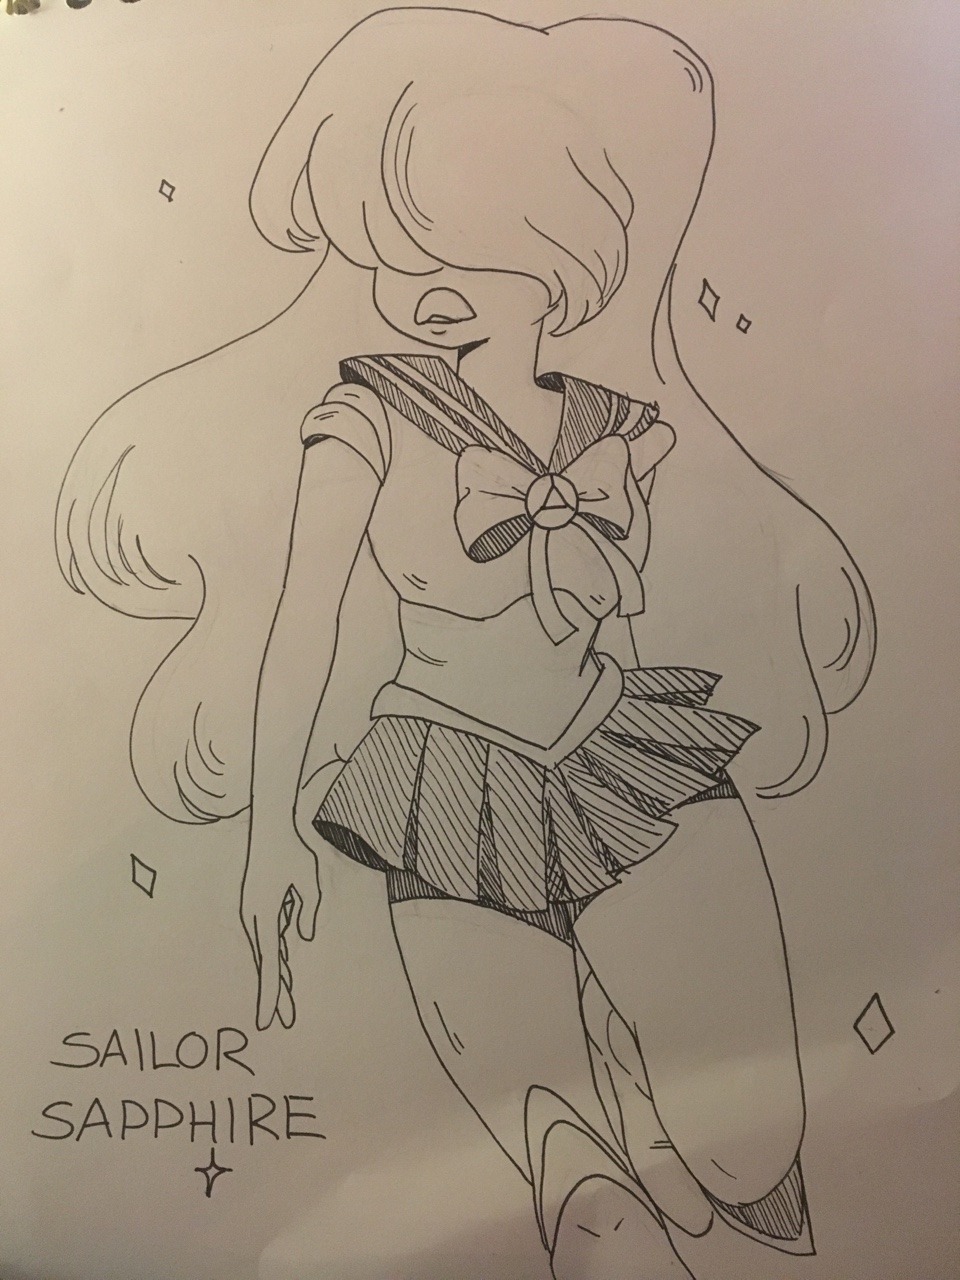 Sailor sapp